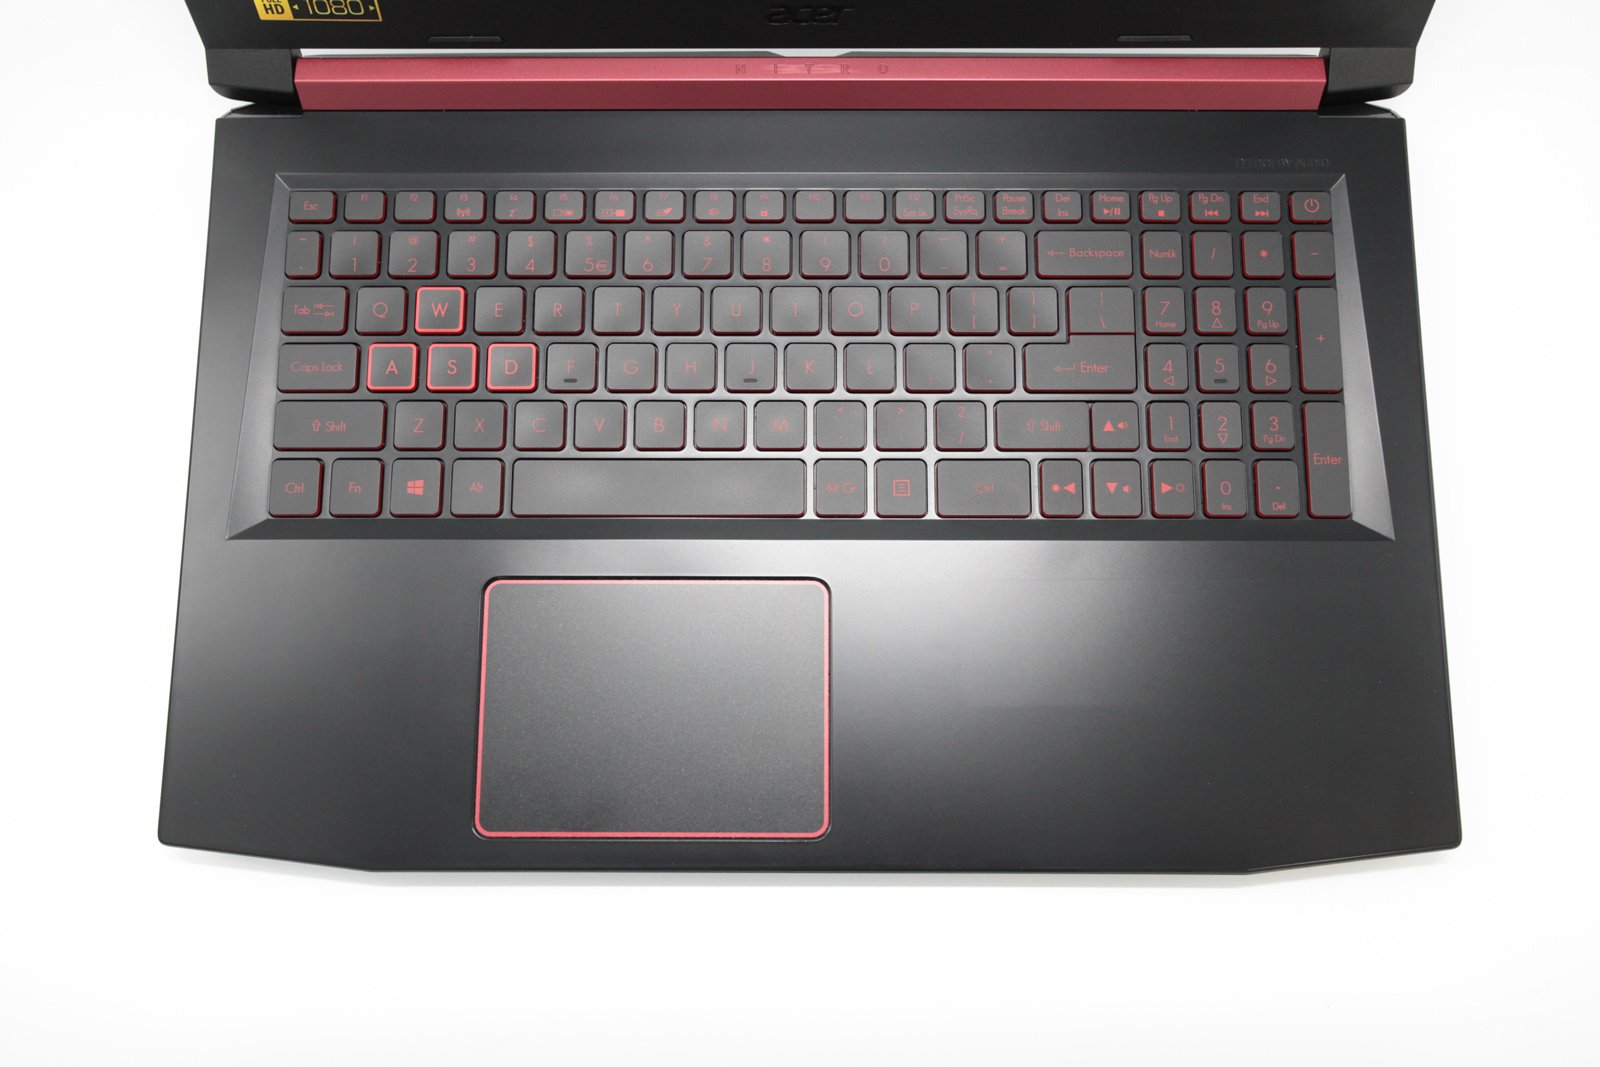 Acer Nitro 5 Gaming Laptop: 15.6 Core i7-7700HQ, 8GB RAM, 256GB SSD NVIDIA 1050 - CruiseTech